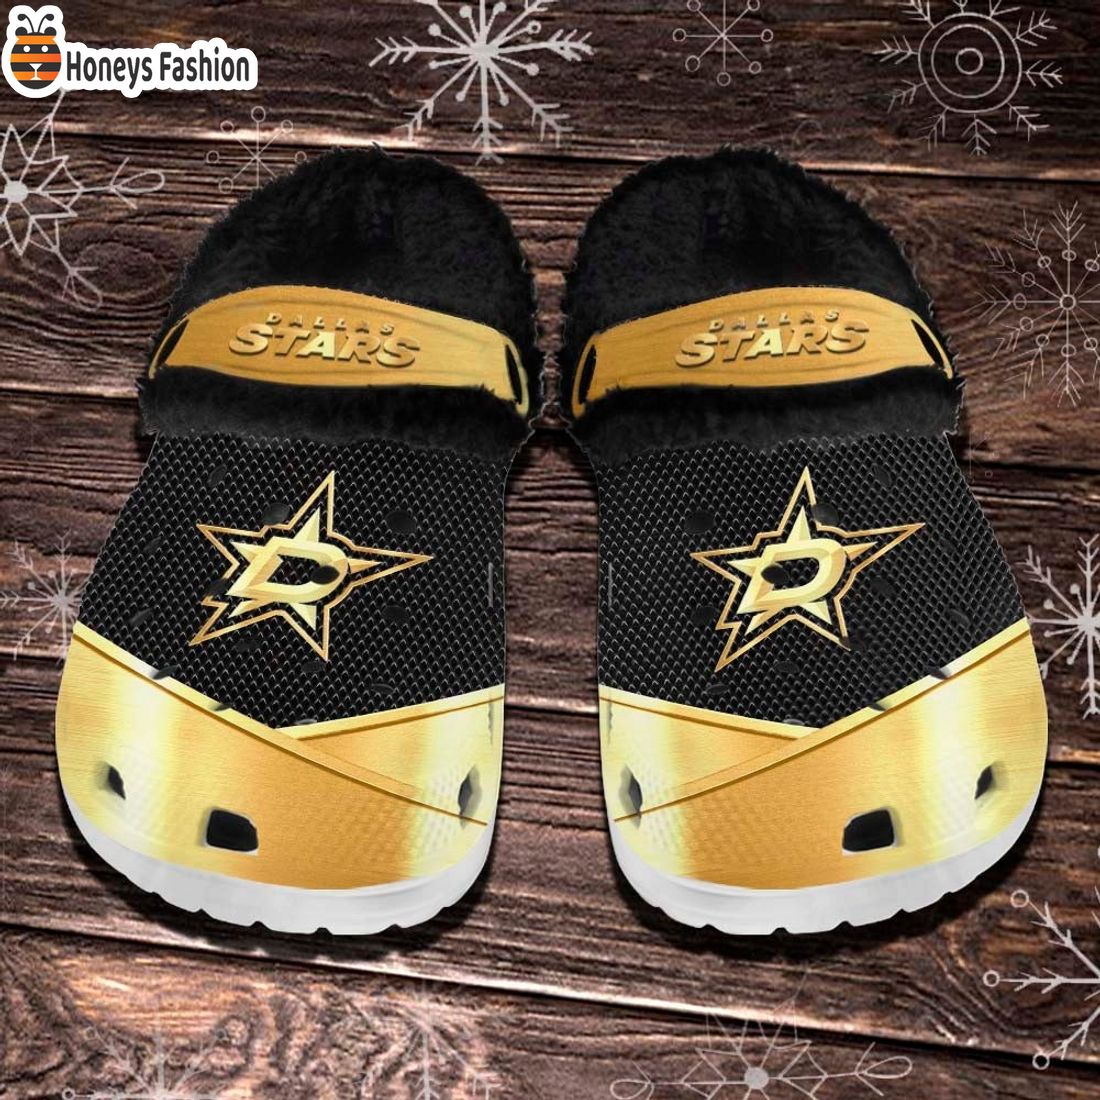 Dallas Stars NHL Fleece Crocs Clogs Shoes